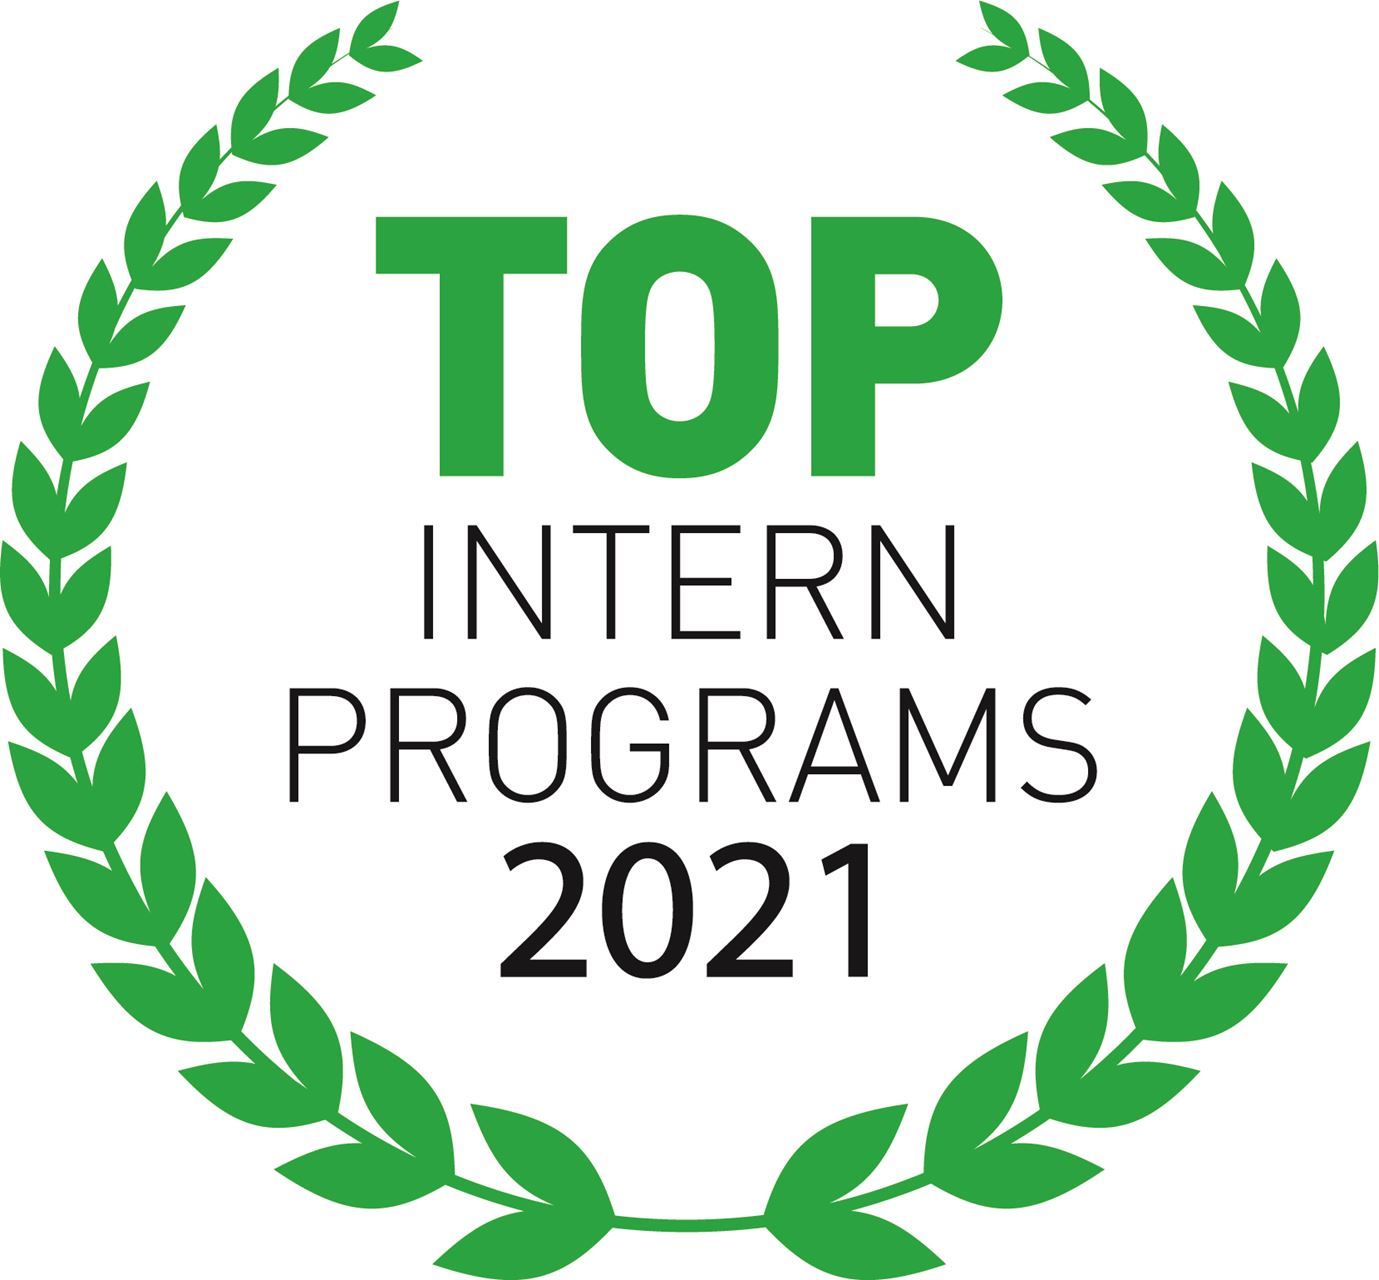 Top Intern Programs Award 2021